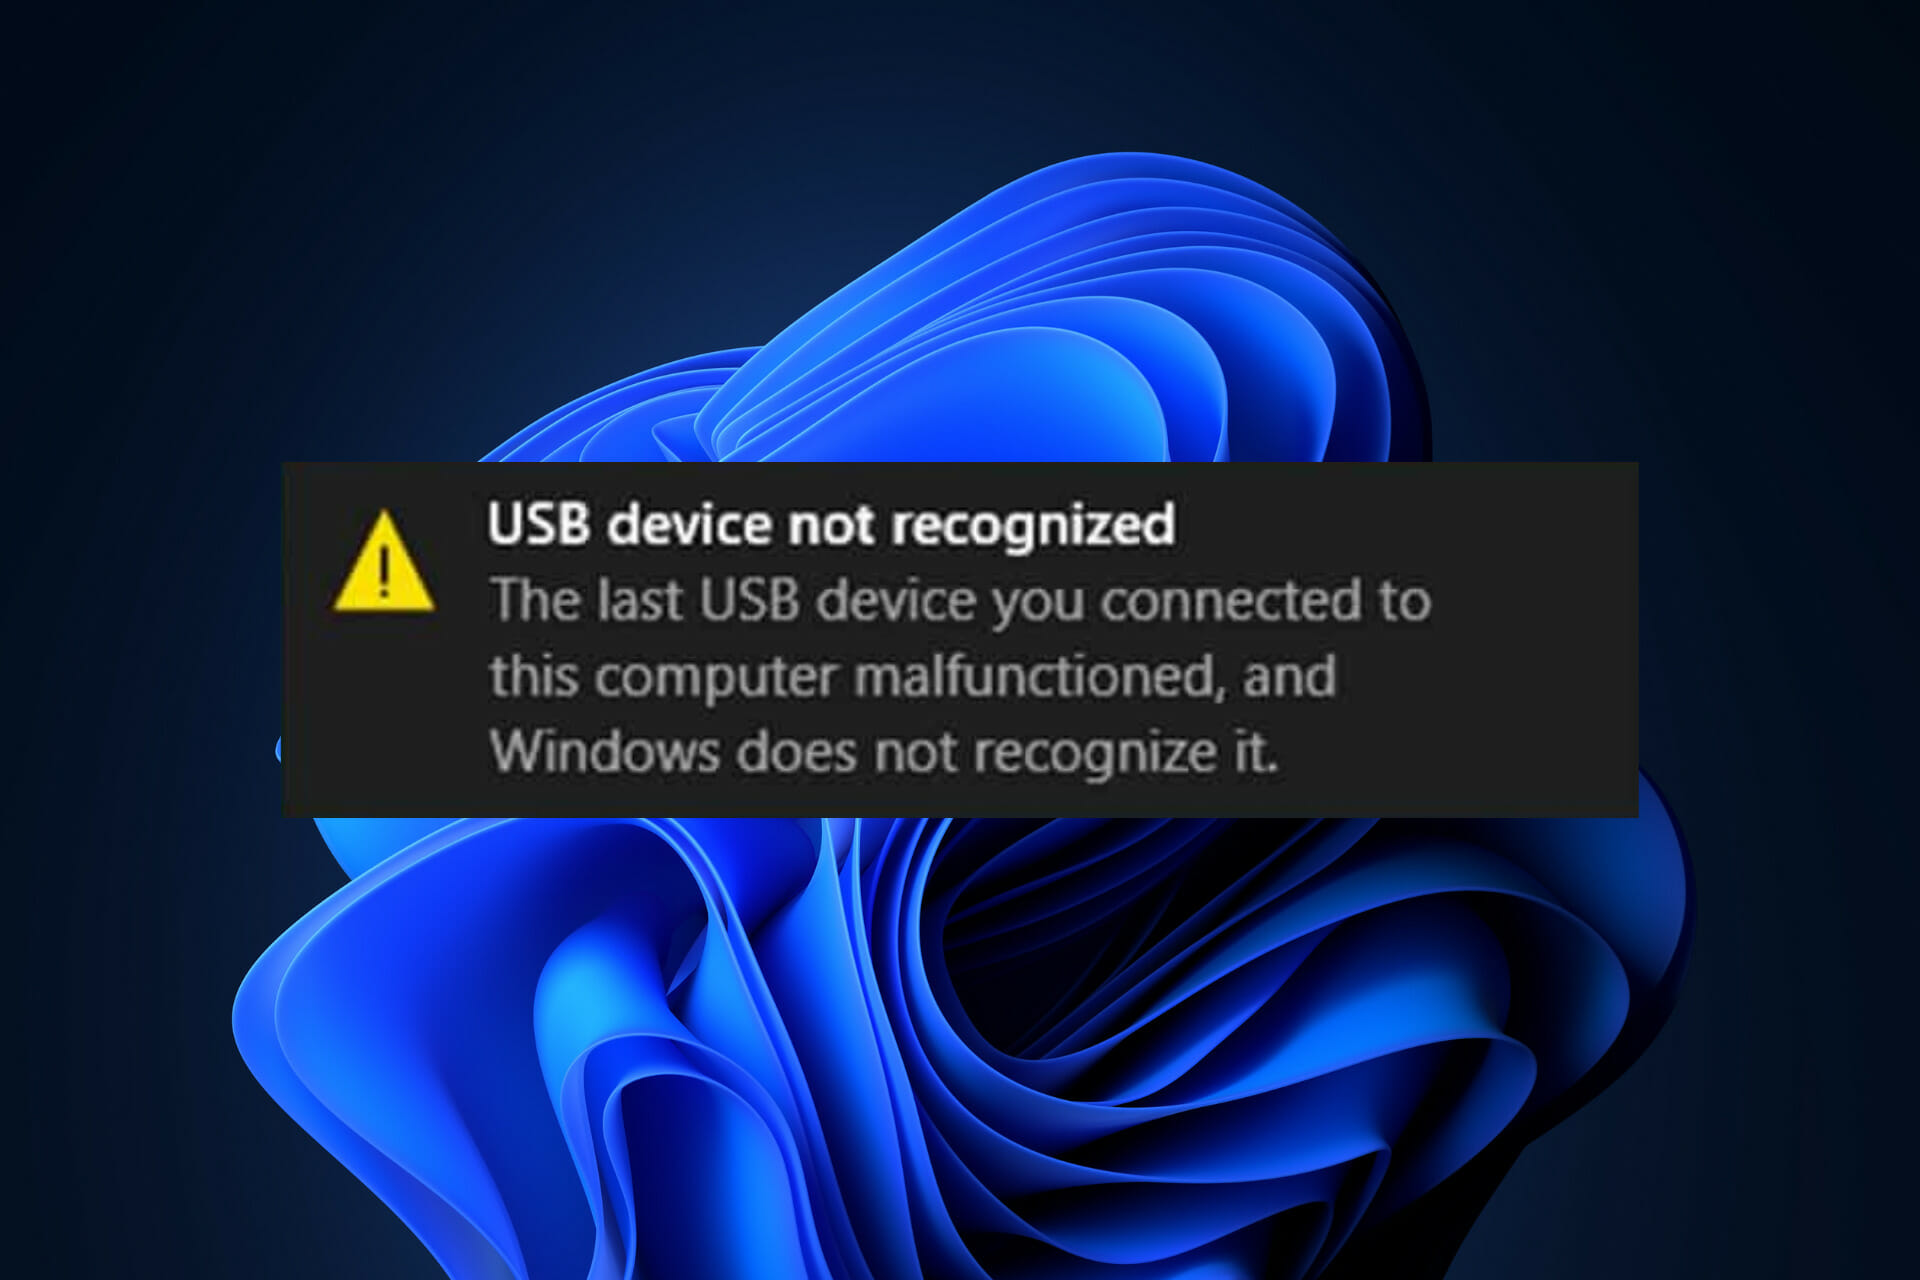 garmin-not-recog garmin dispositivo usb no reconocido windows 11